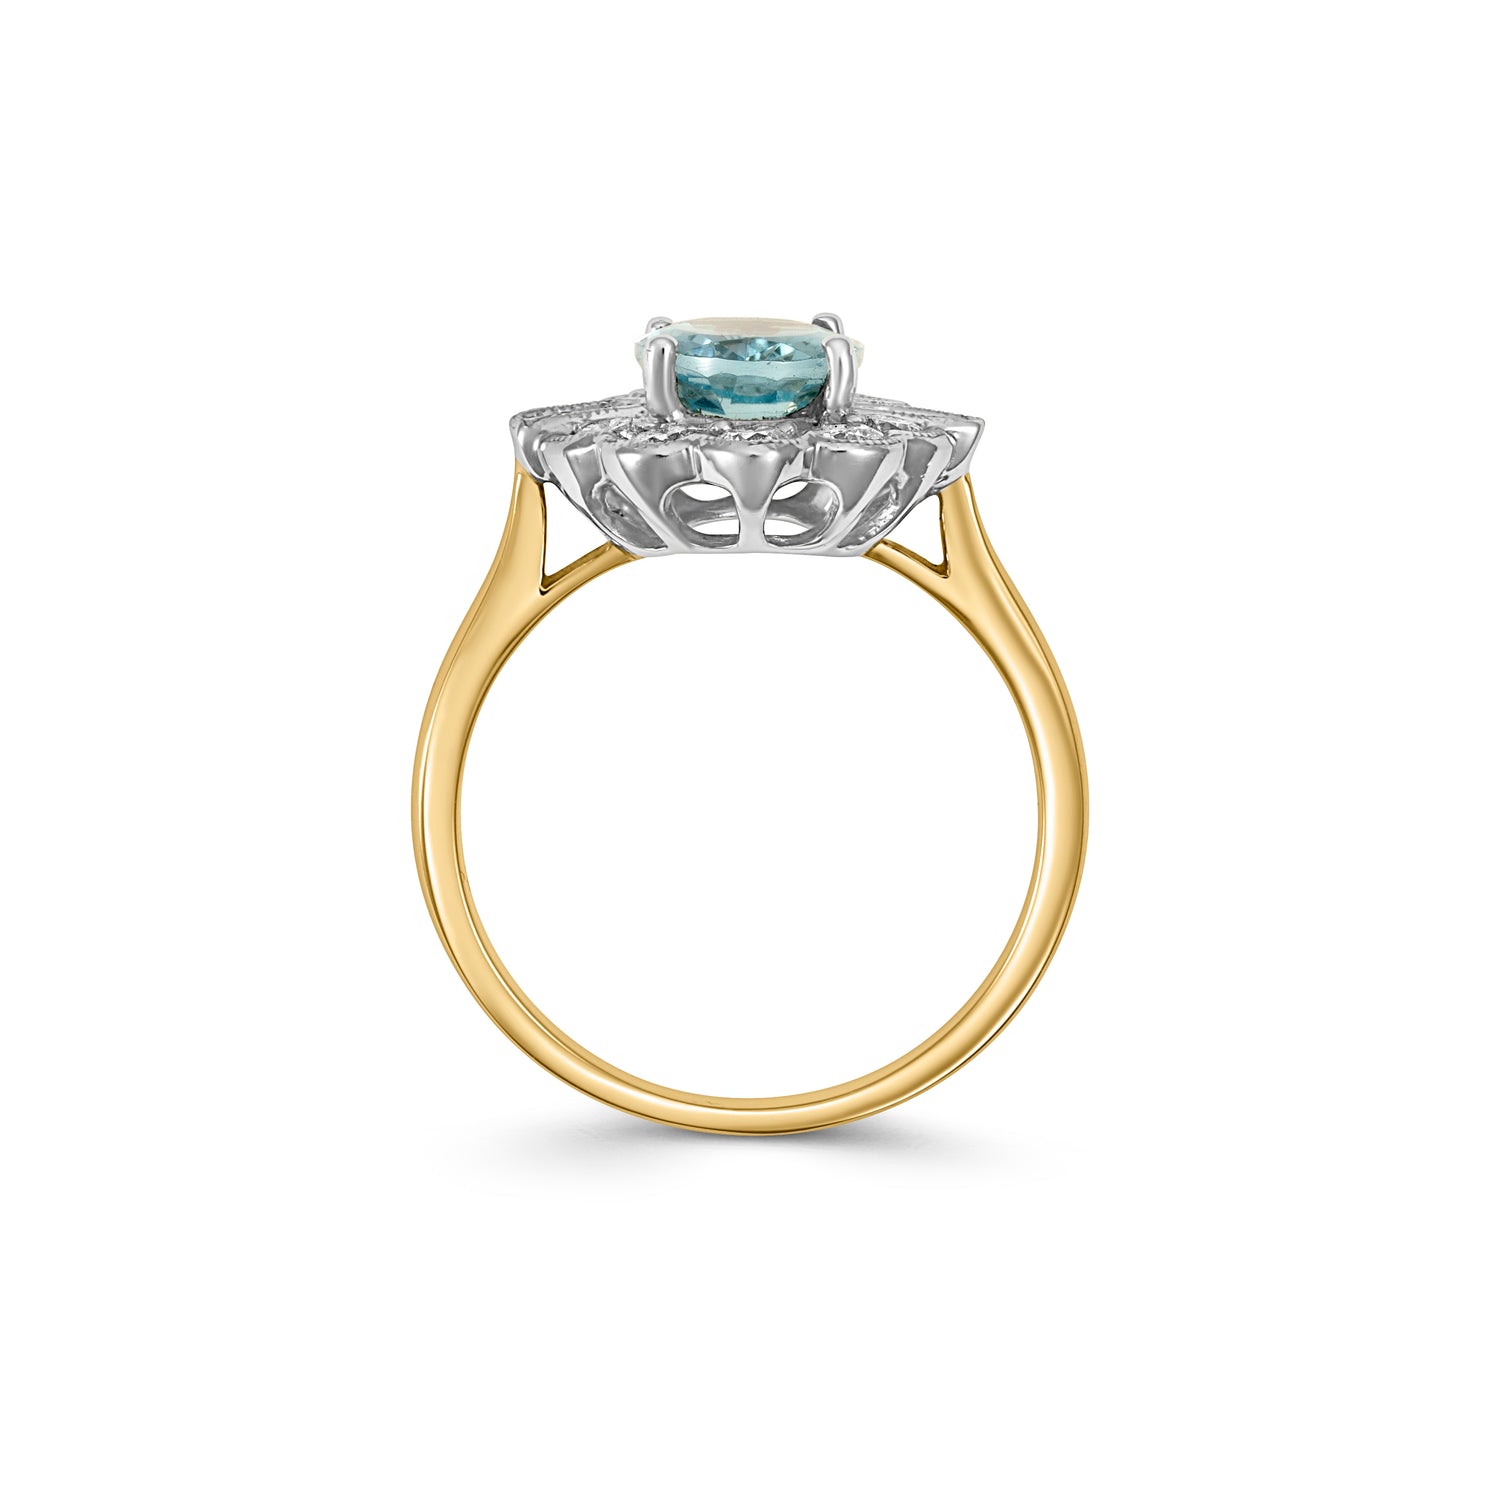 18ct Gold Aquamarine and Diamond Cluster Ring - Robert Anthony Jewellers, Edinburgh